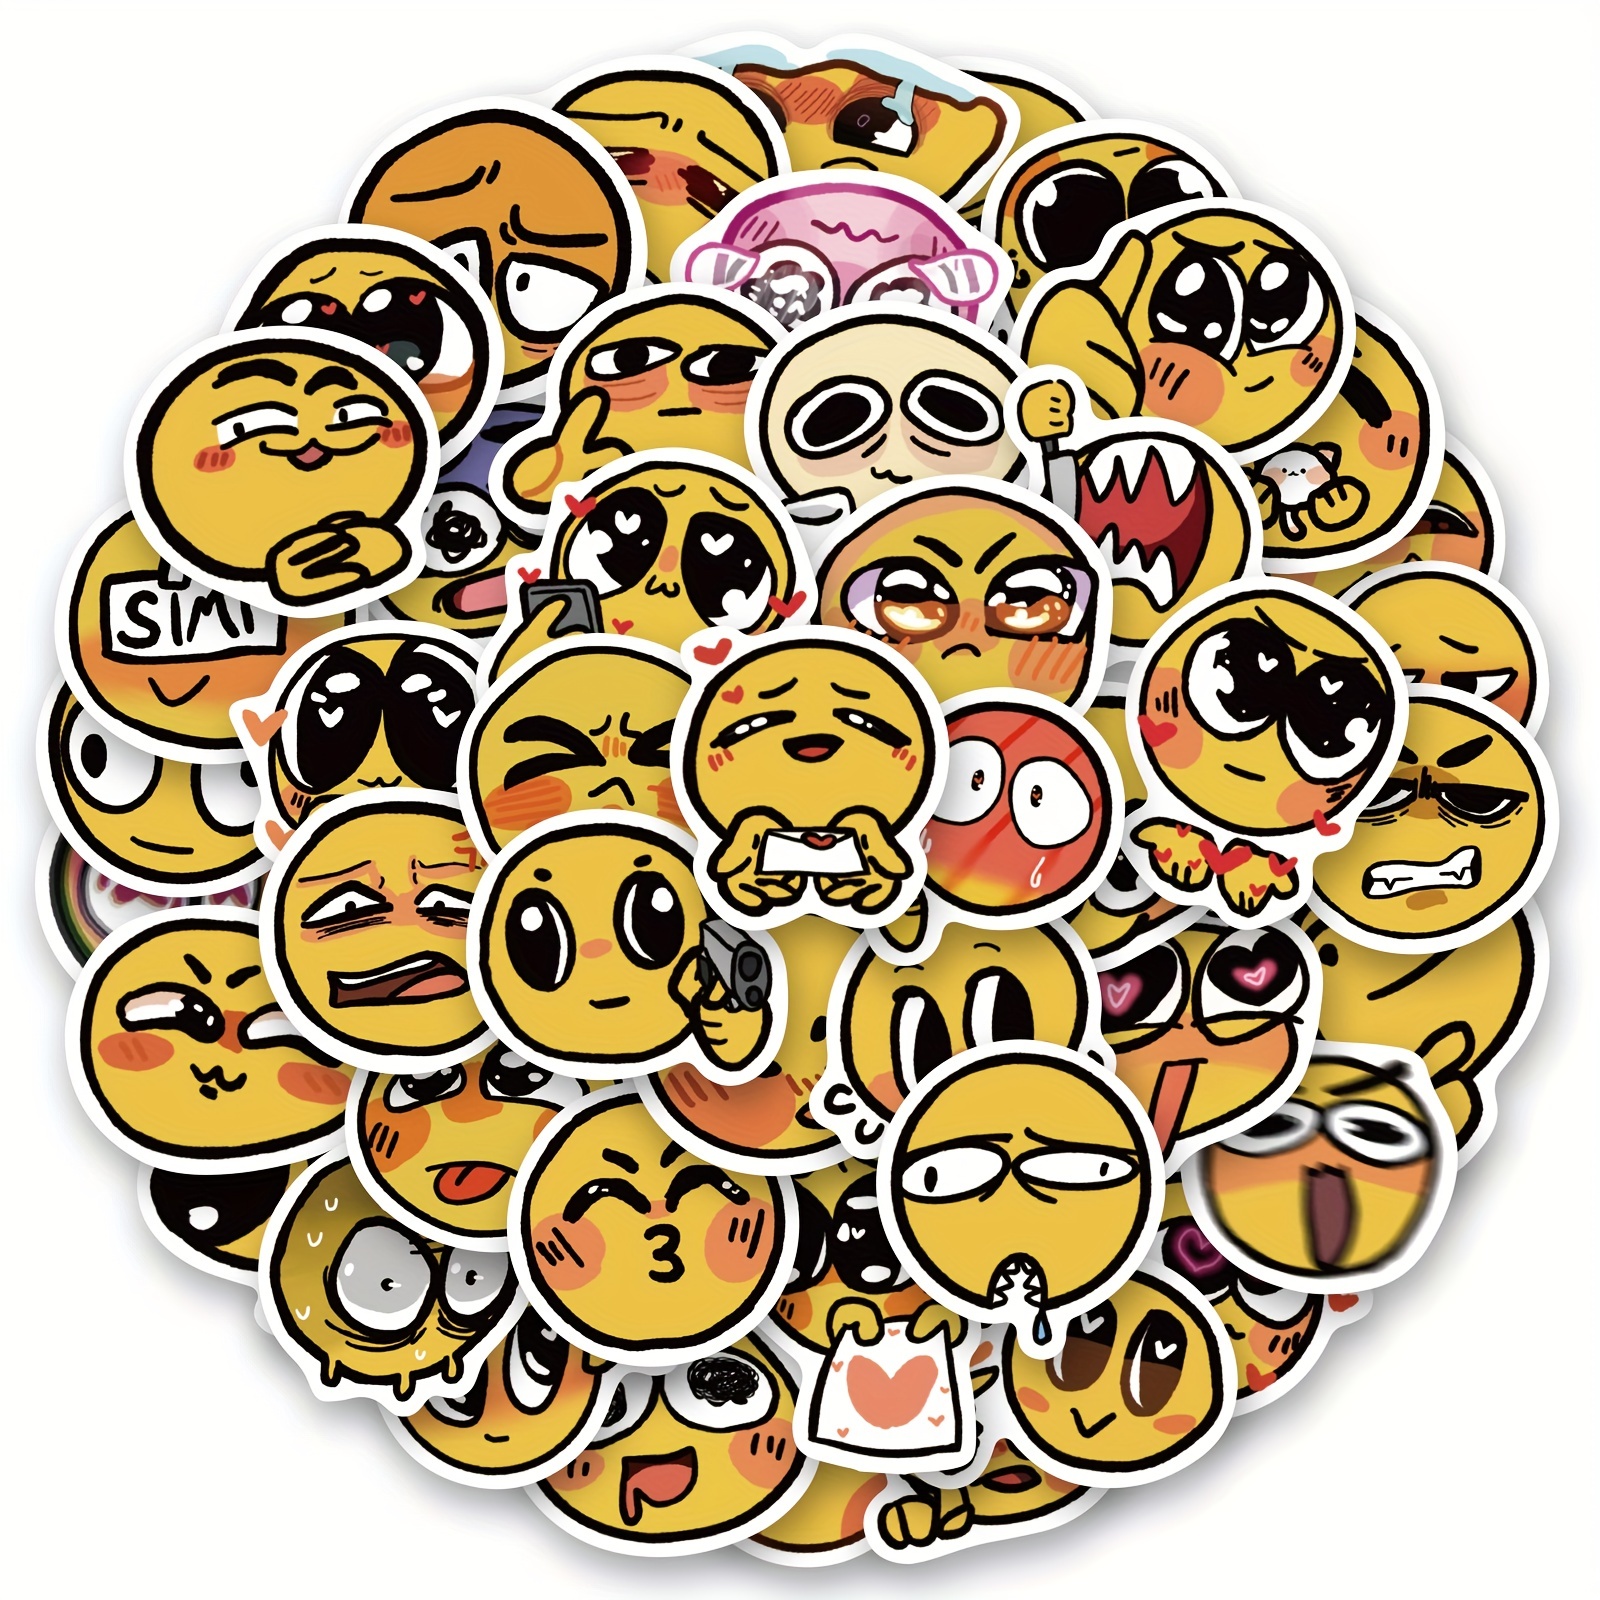 cursed emoji sticker pack | Poster